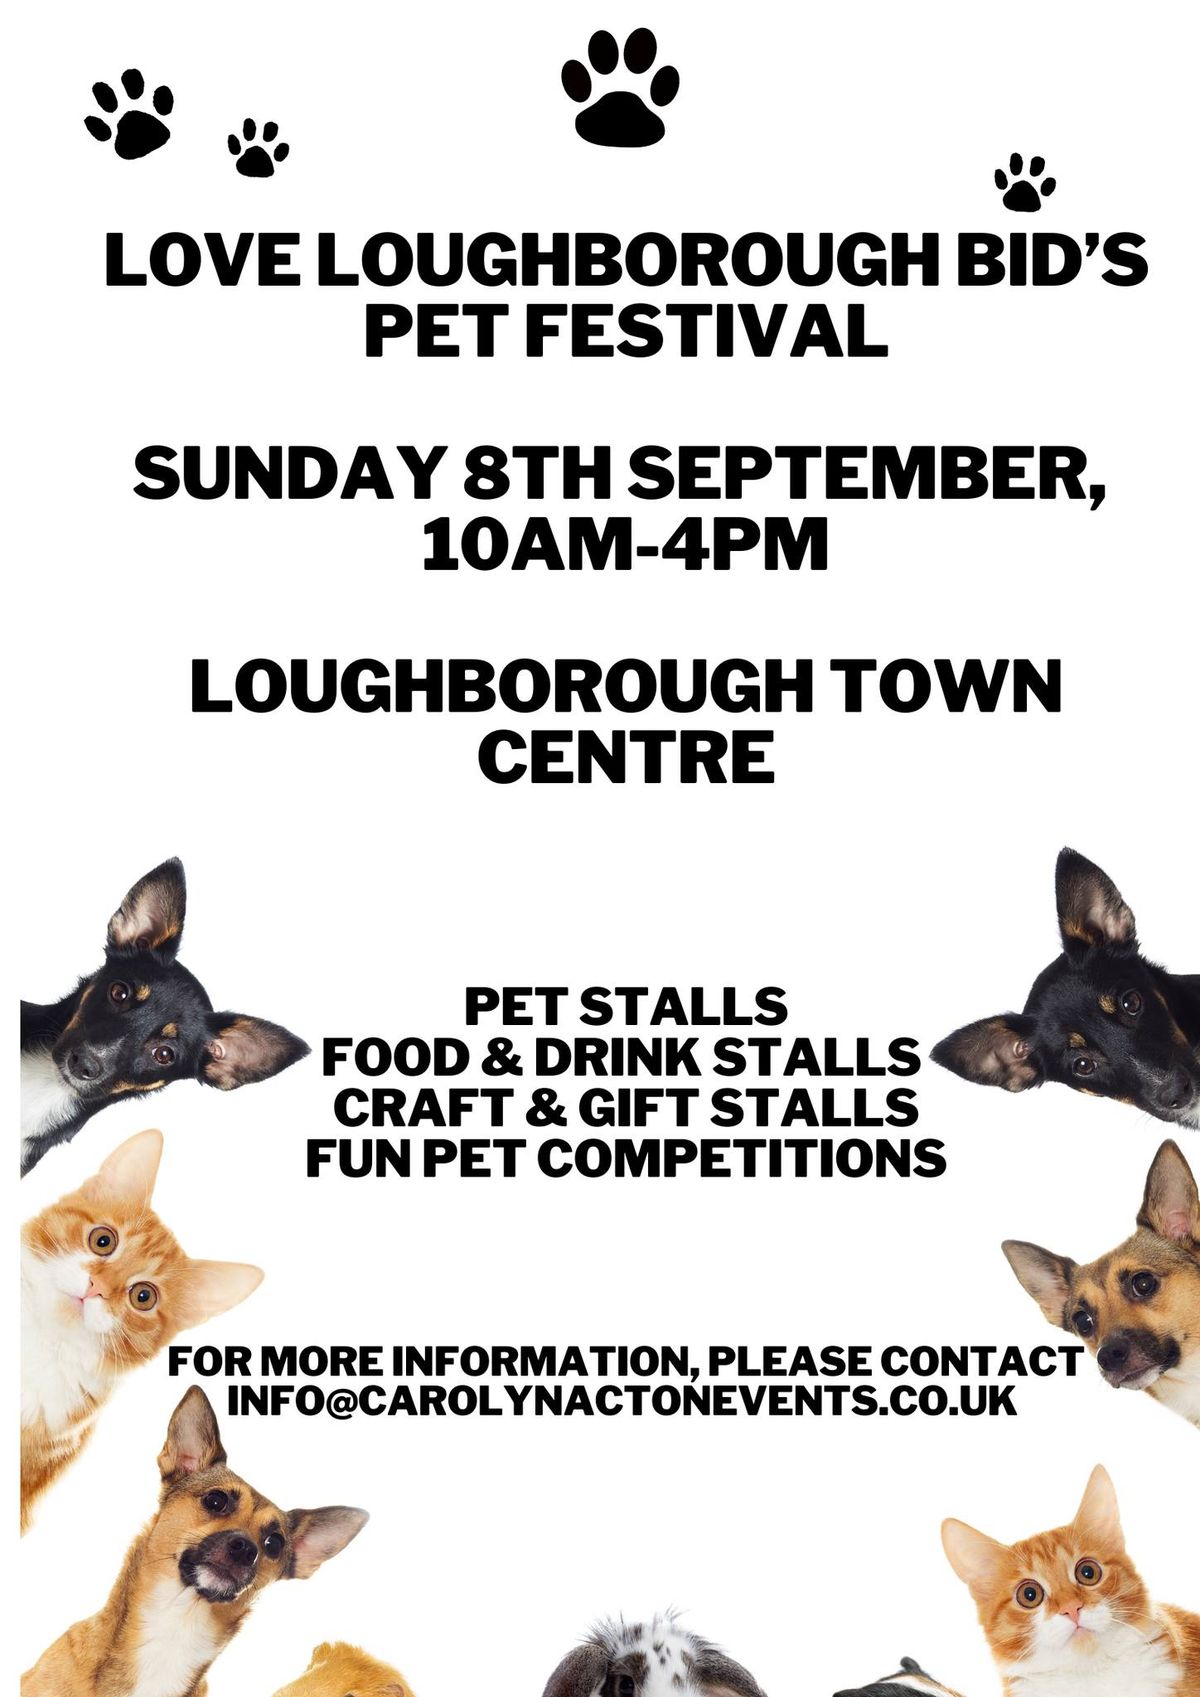 Loughborough BID's Pet Festival